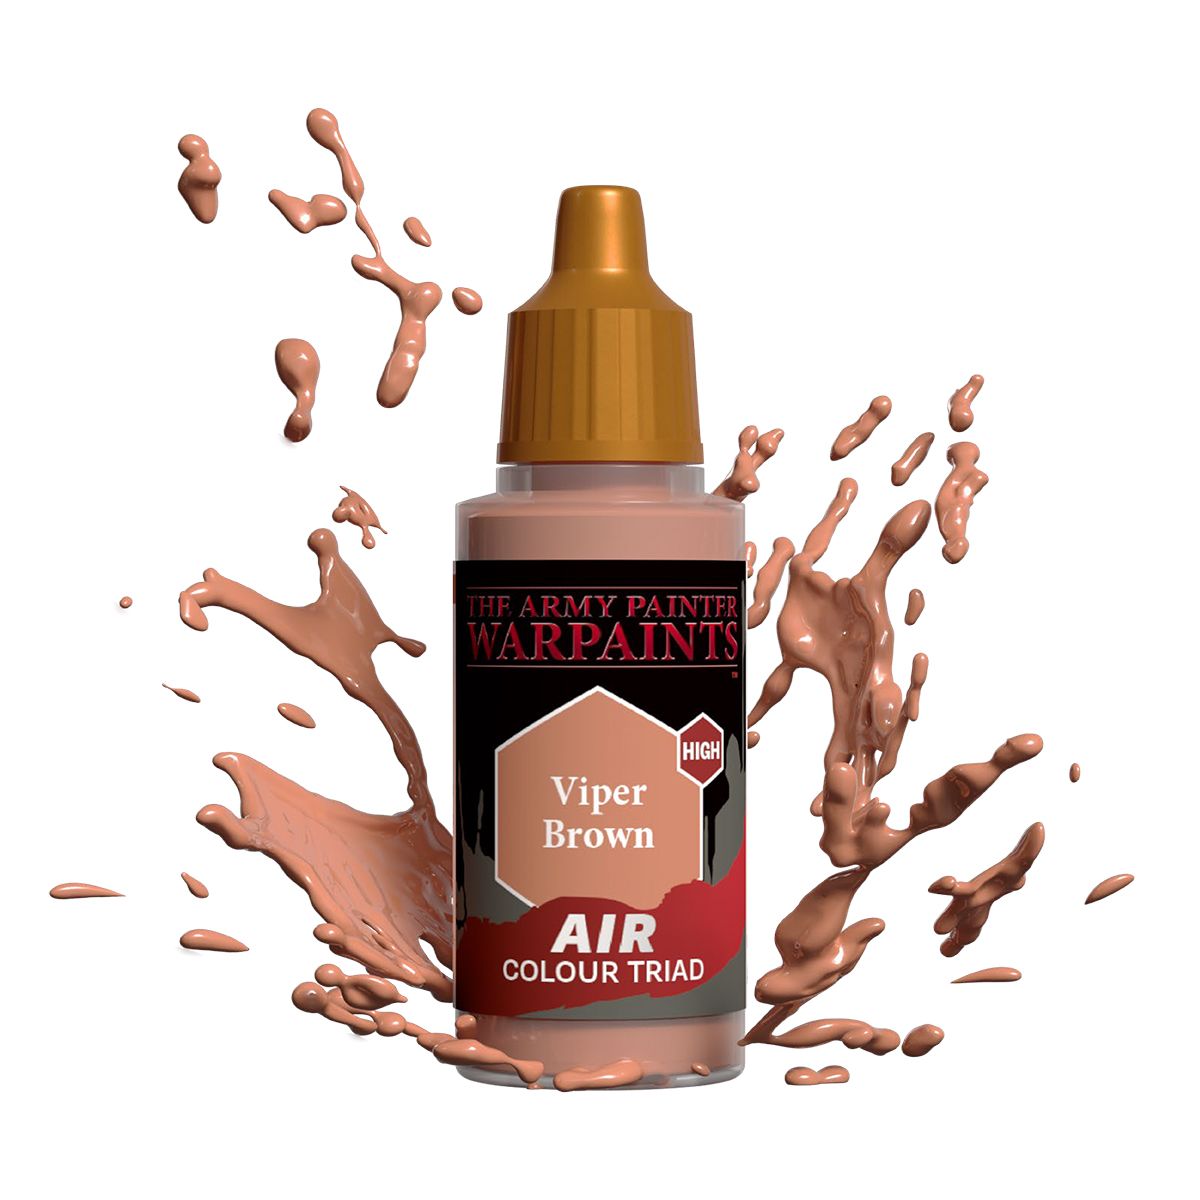 Warpaints Air : Viper Brown